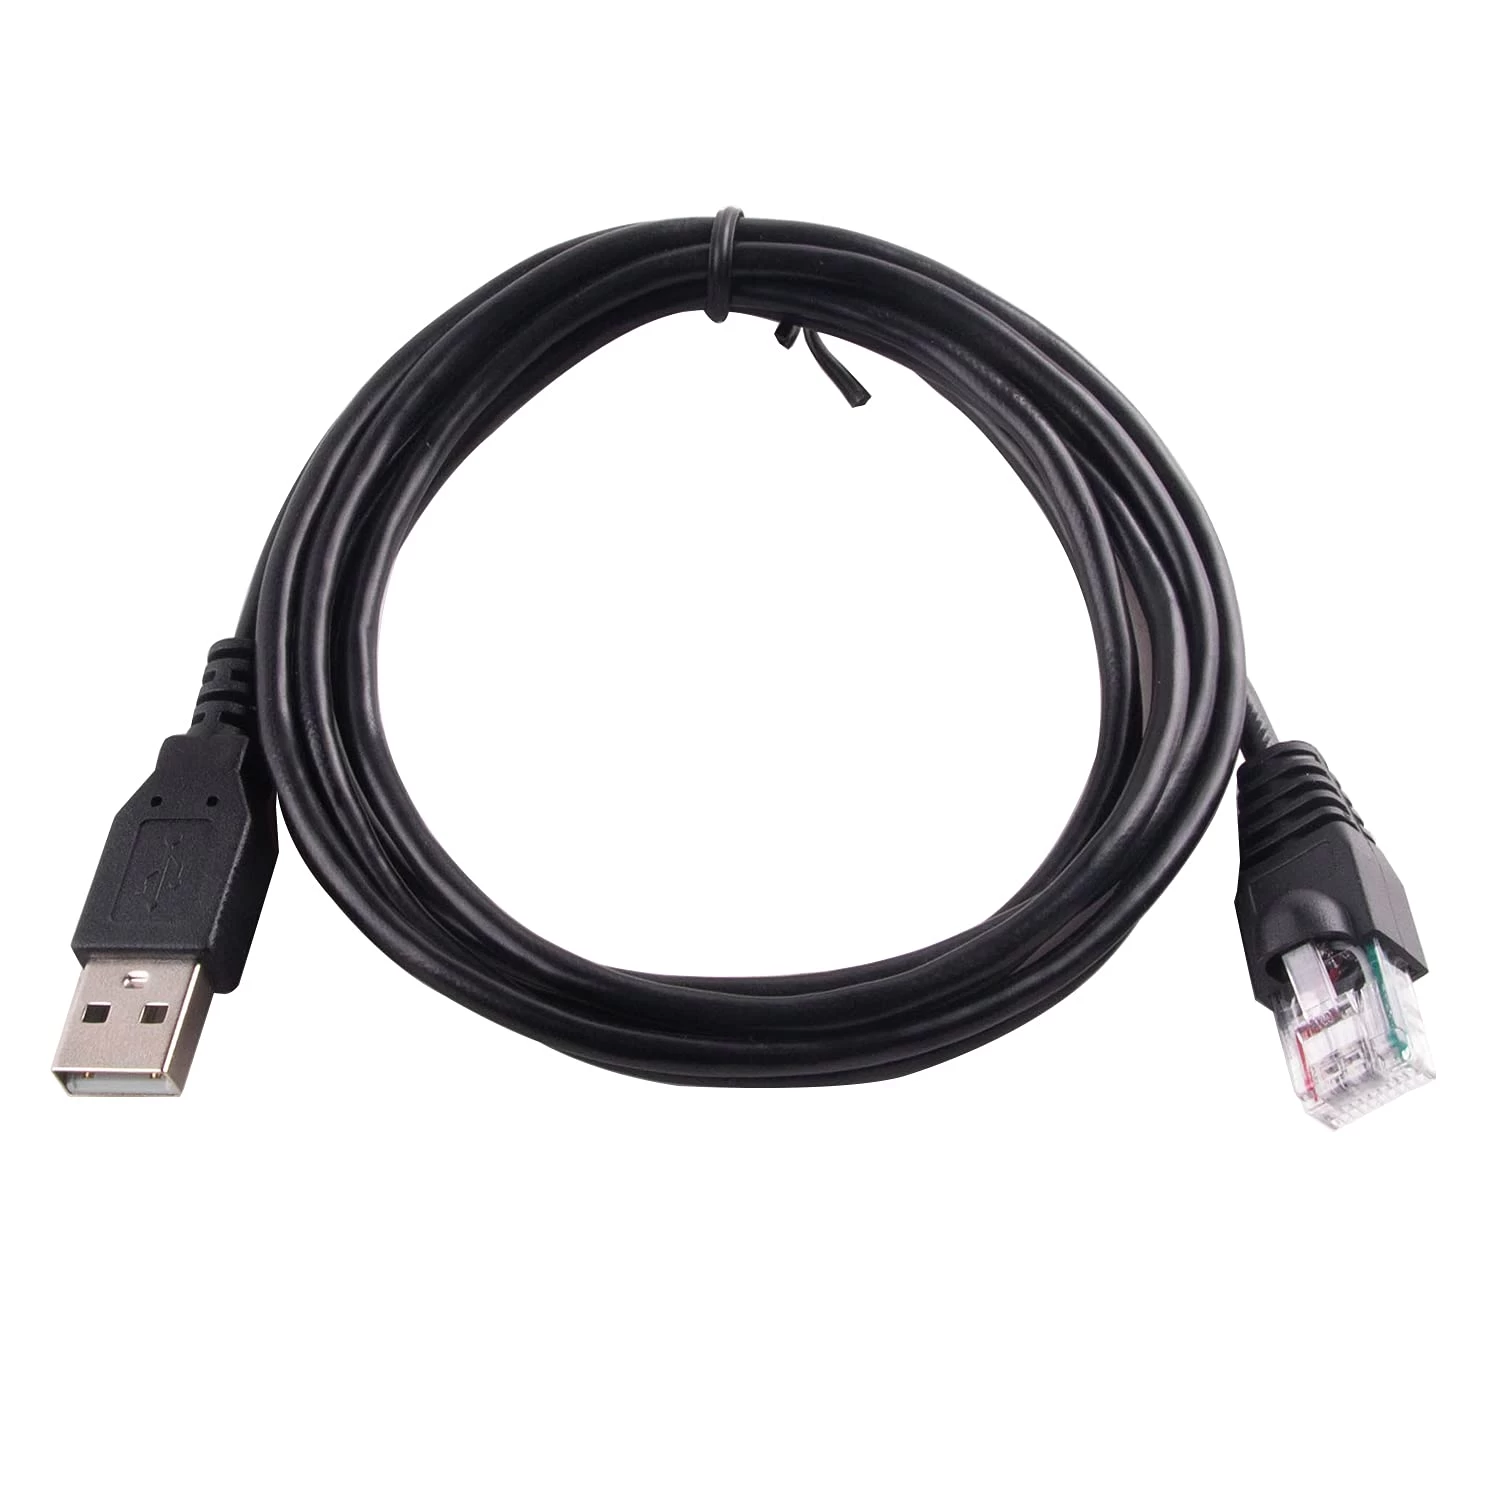 Akıllı UPS için APC Kablosu USB - RJ50 Kontrol Kablosu